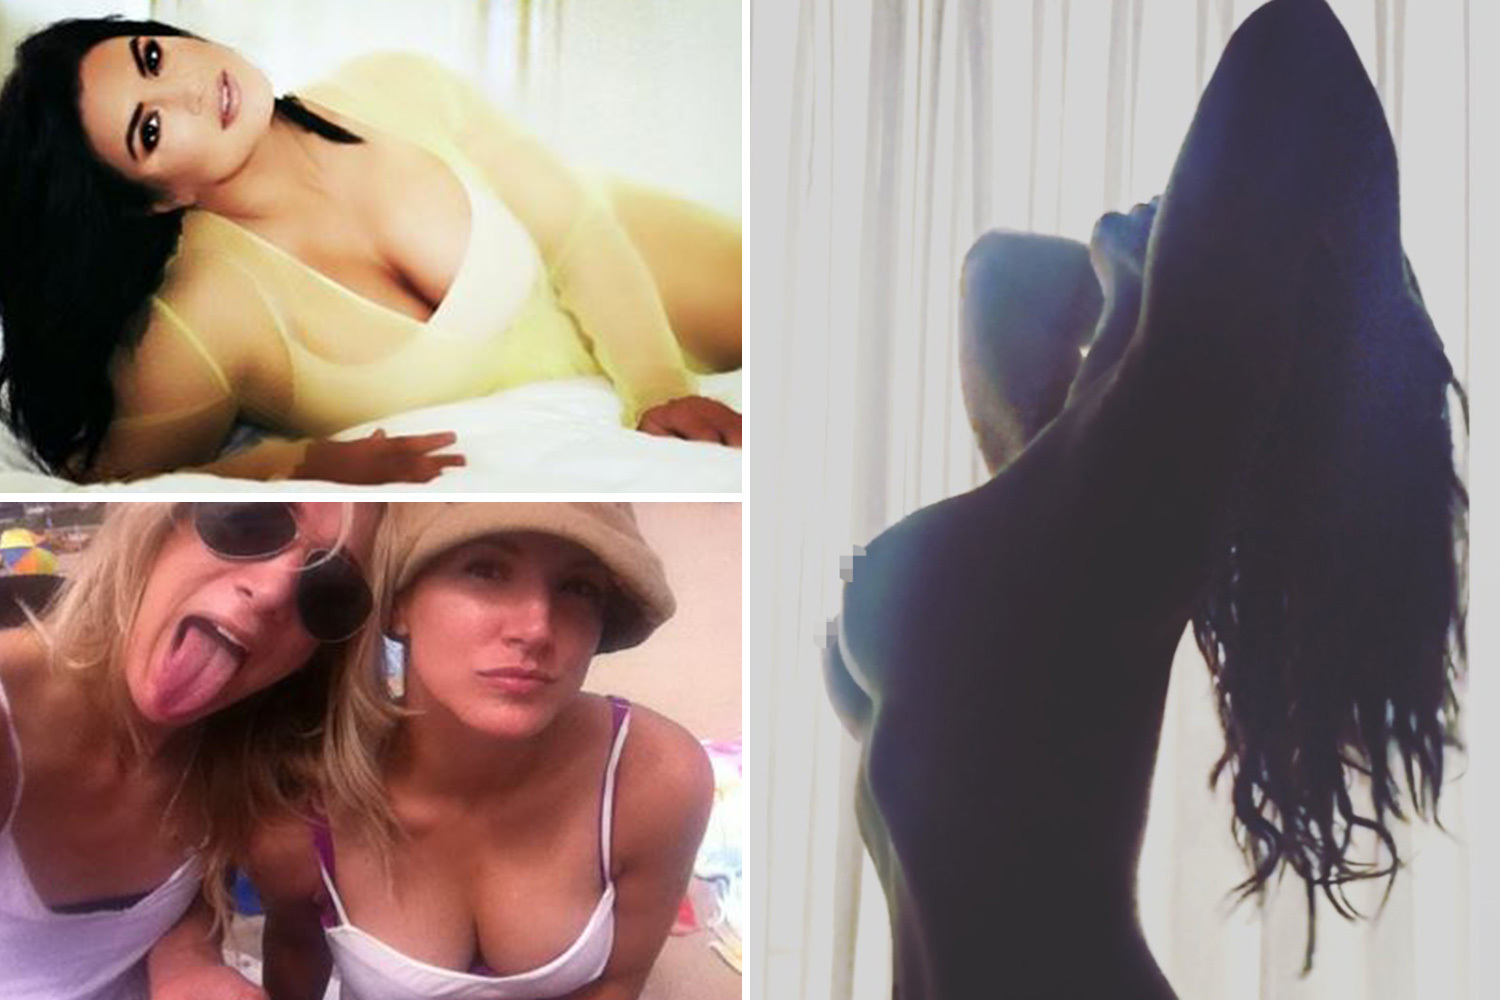 chad burski recommends Hot Pics Of Gina Carano